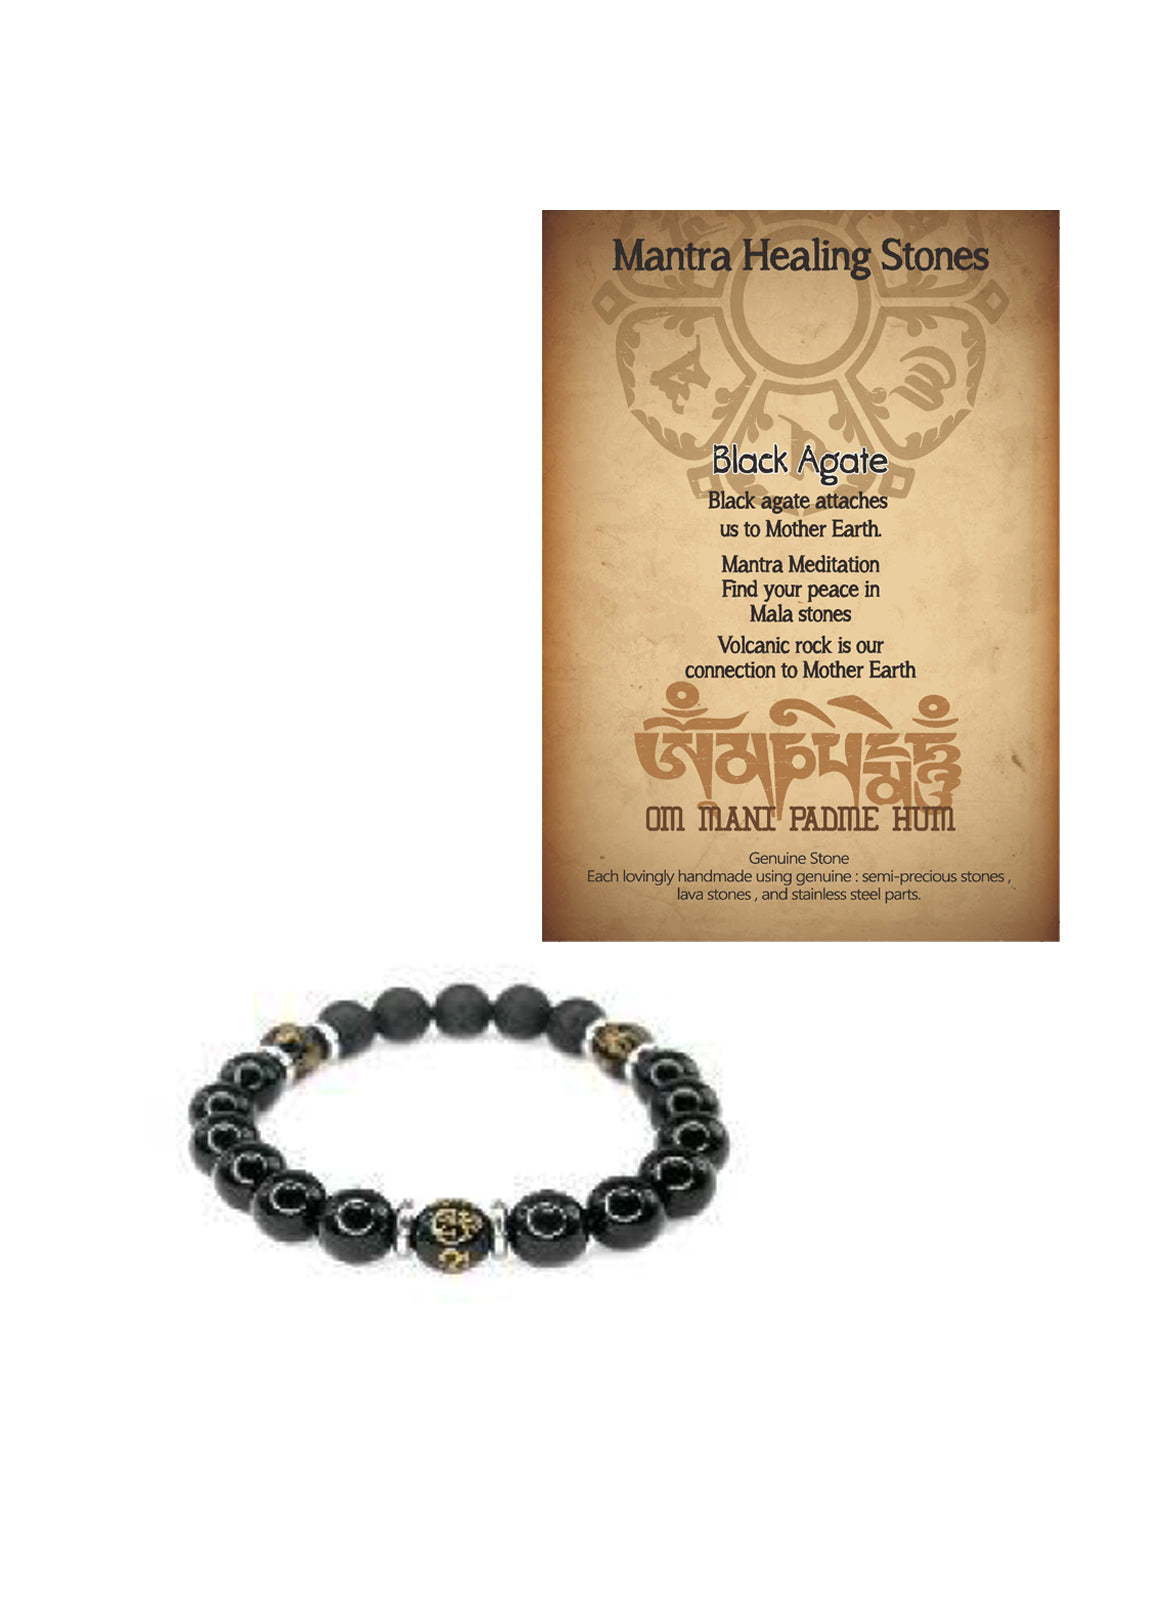 Mantra Healing Stone Bracelets